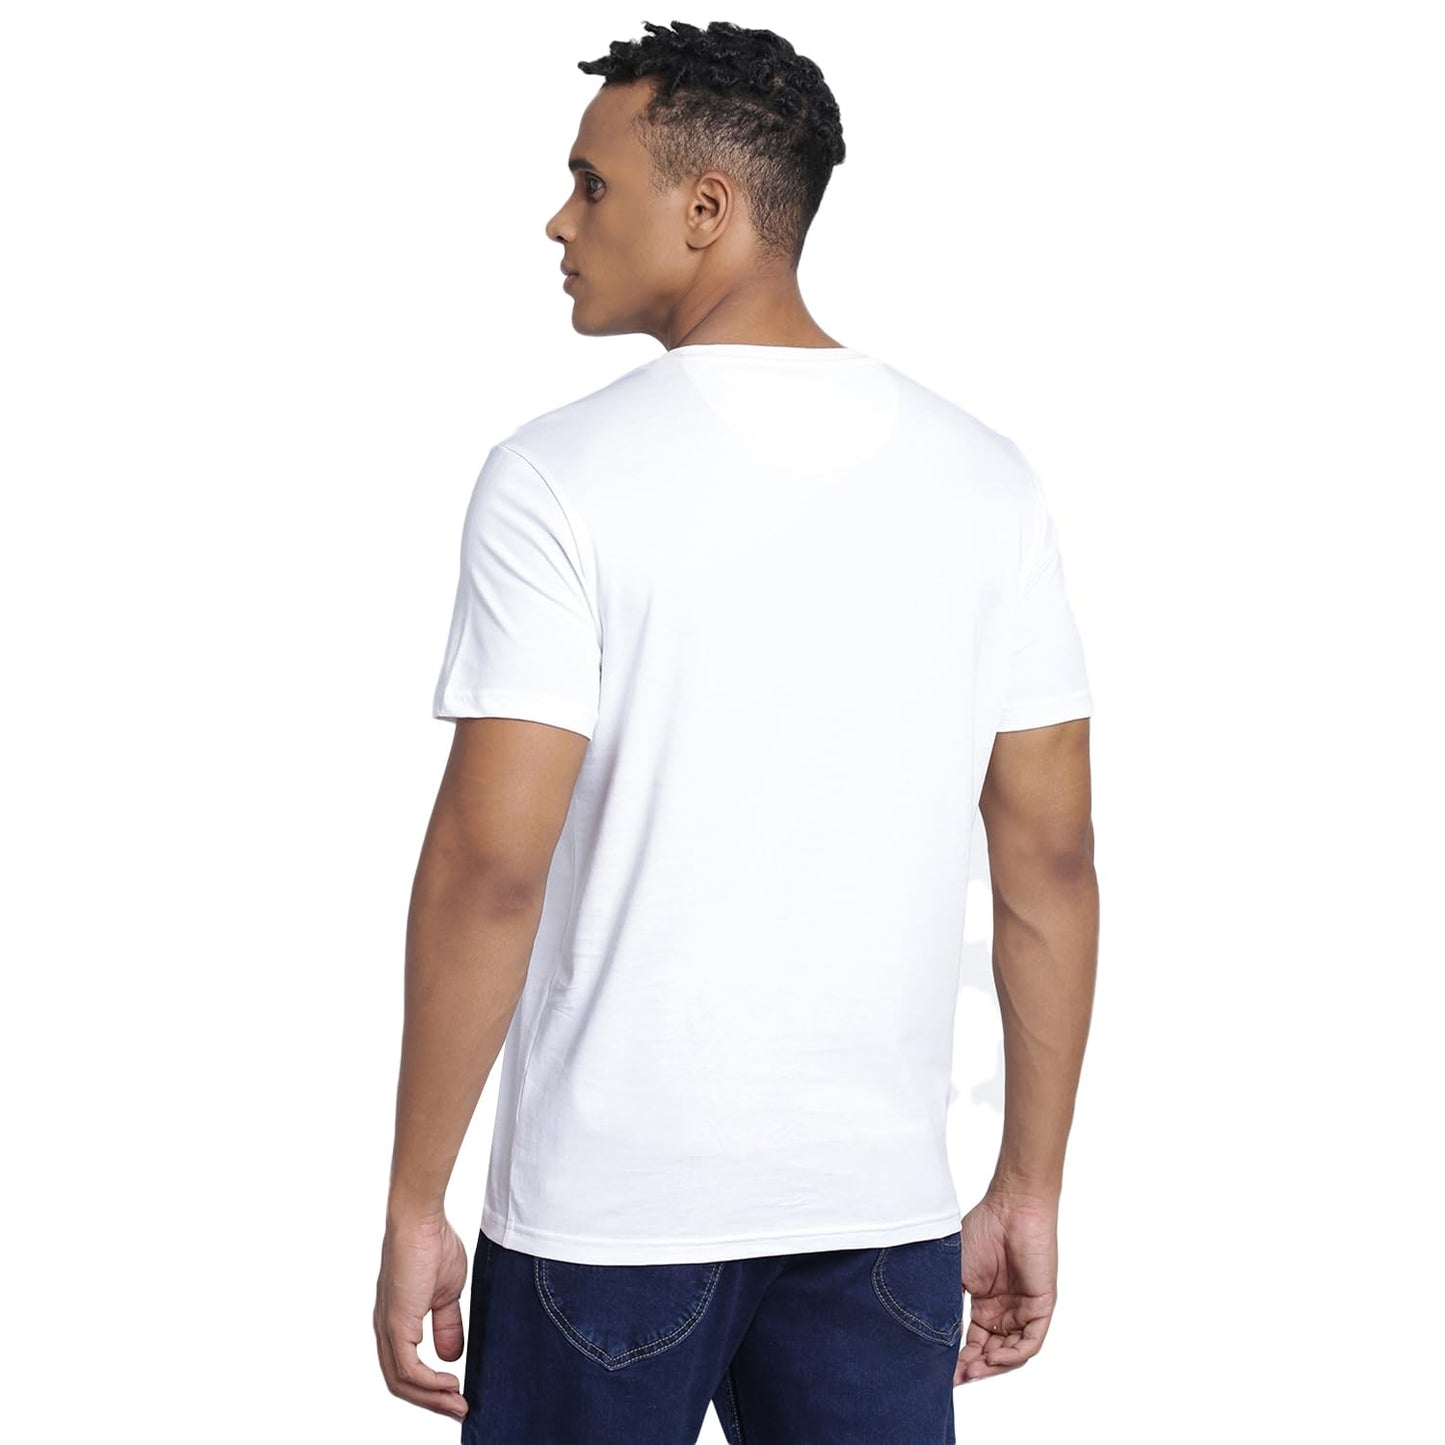 Lee Men's Slim Fit Shirt (LMTS004877_White